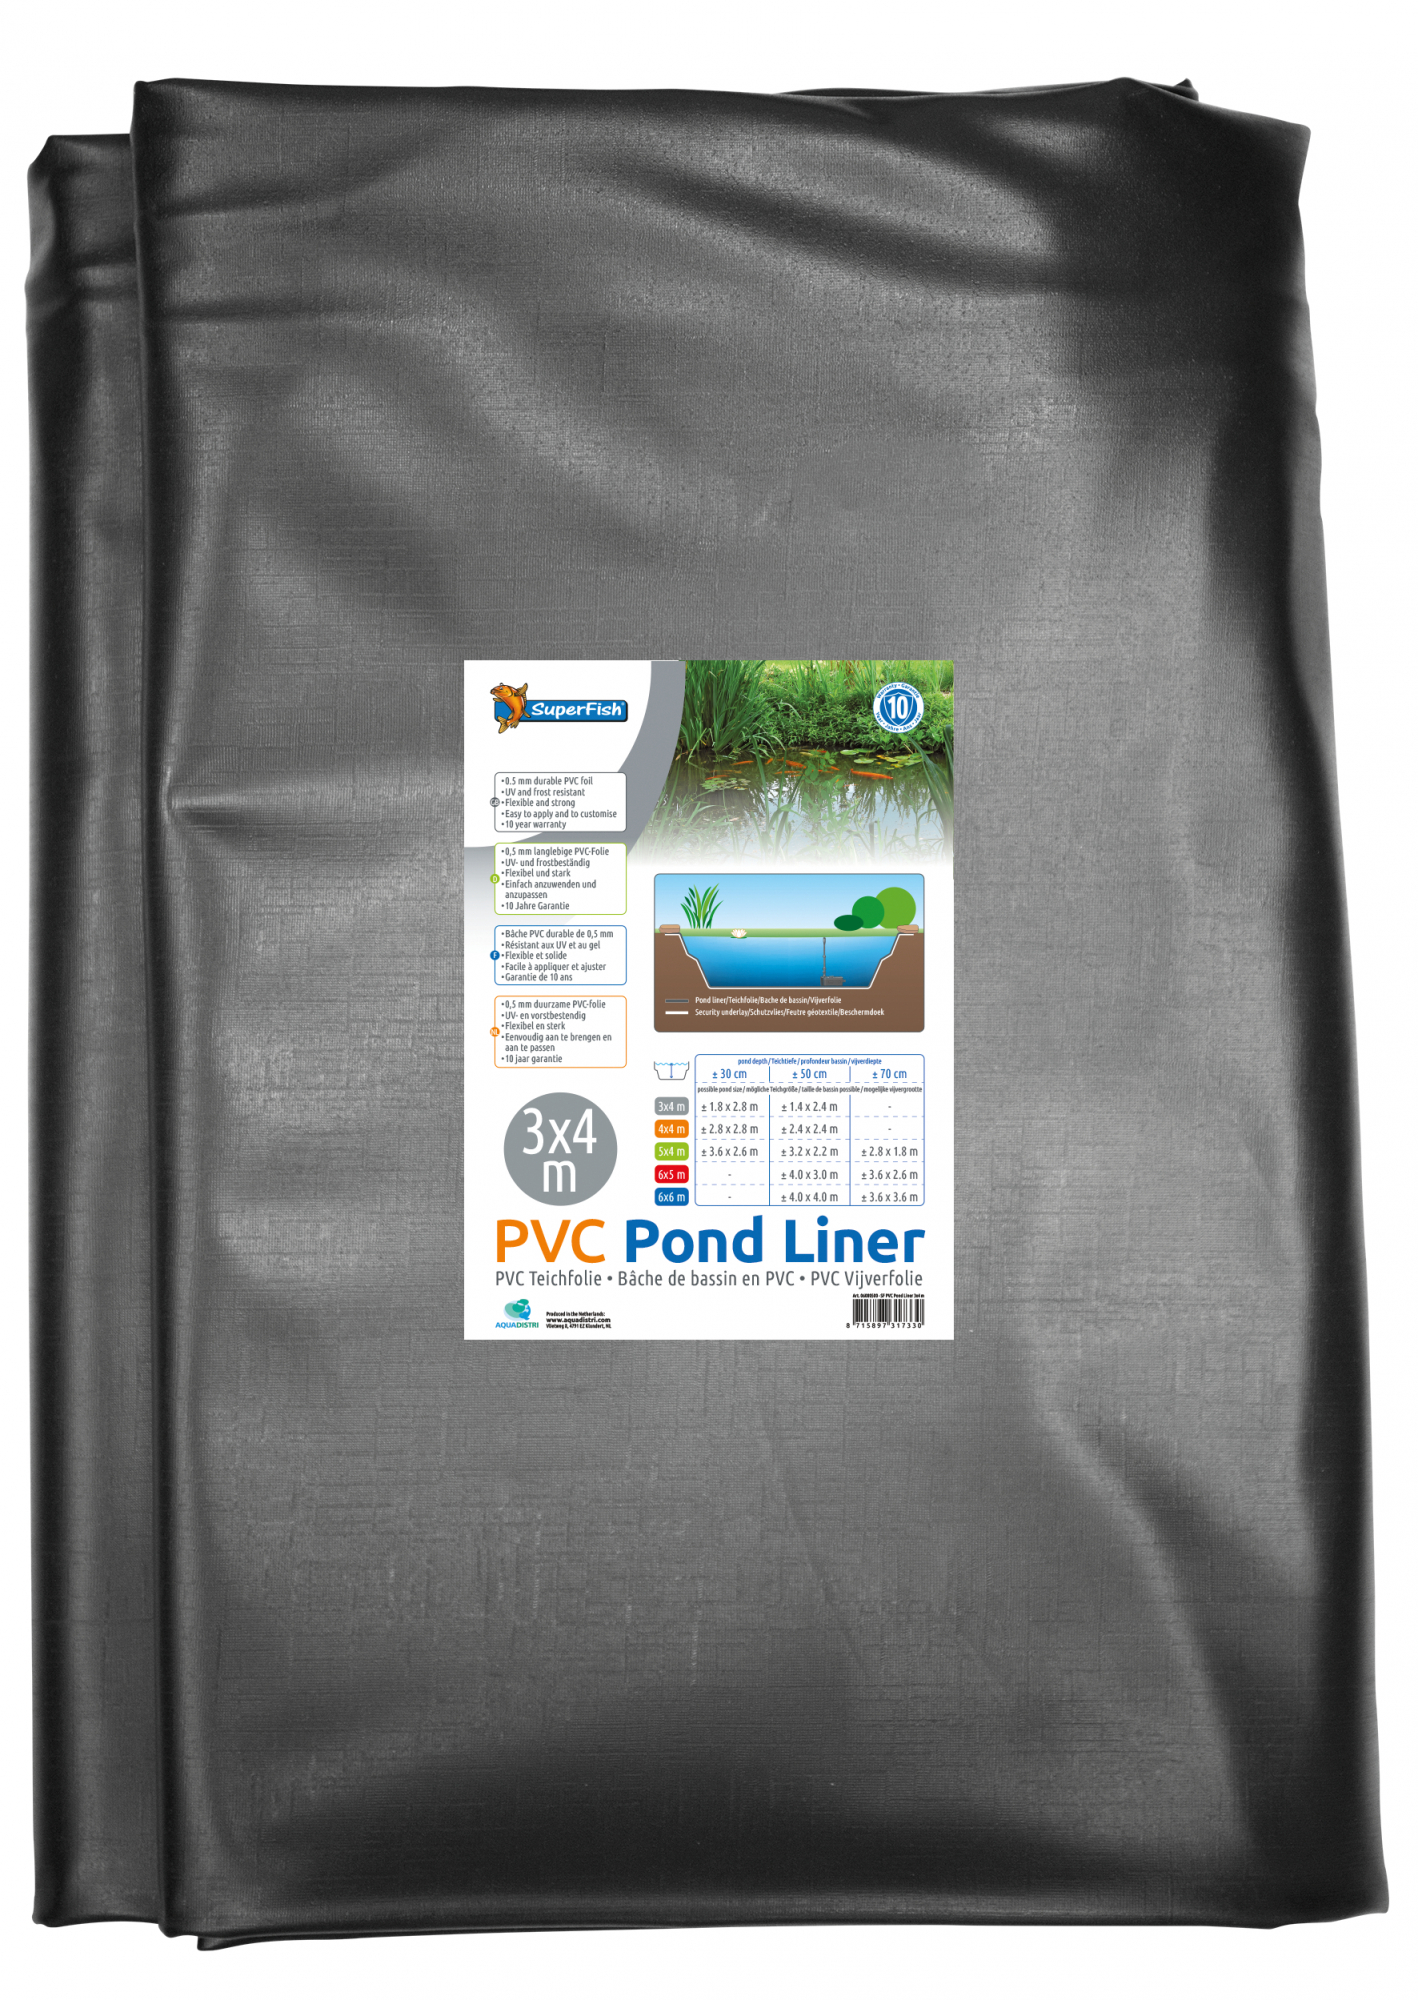 SuperFish telone per laghetti - PVC Pond Liner - diverse misure disponibili